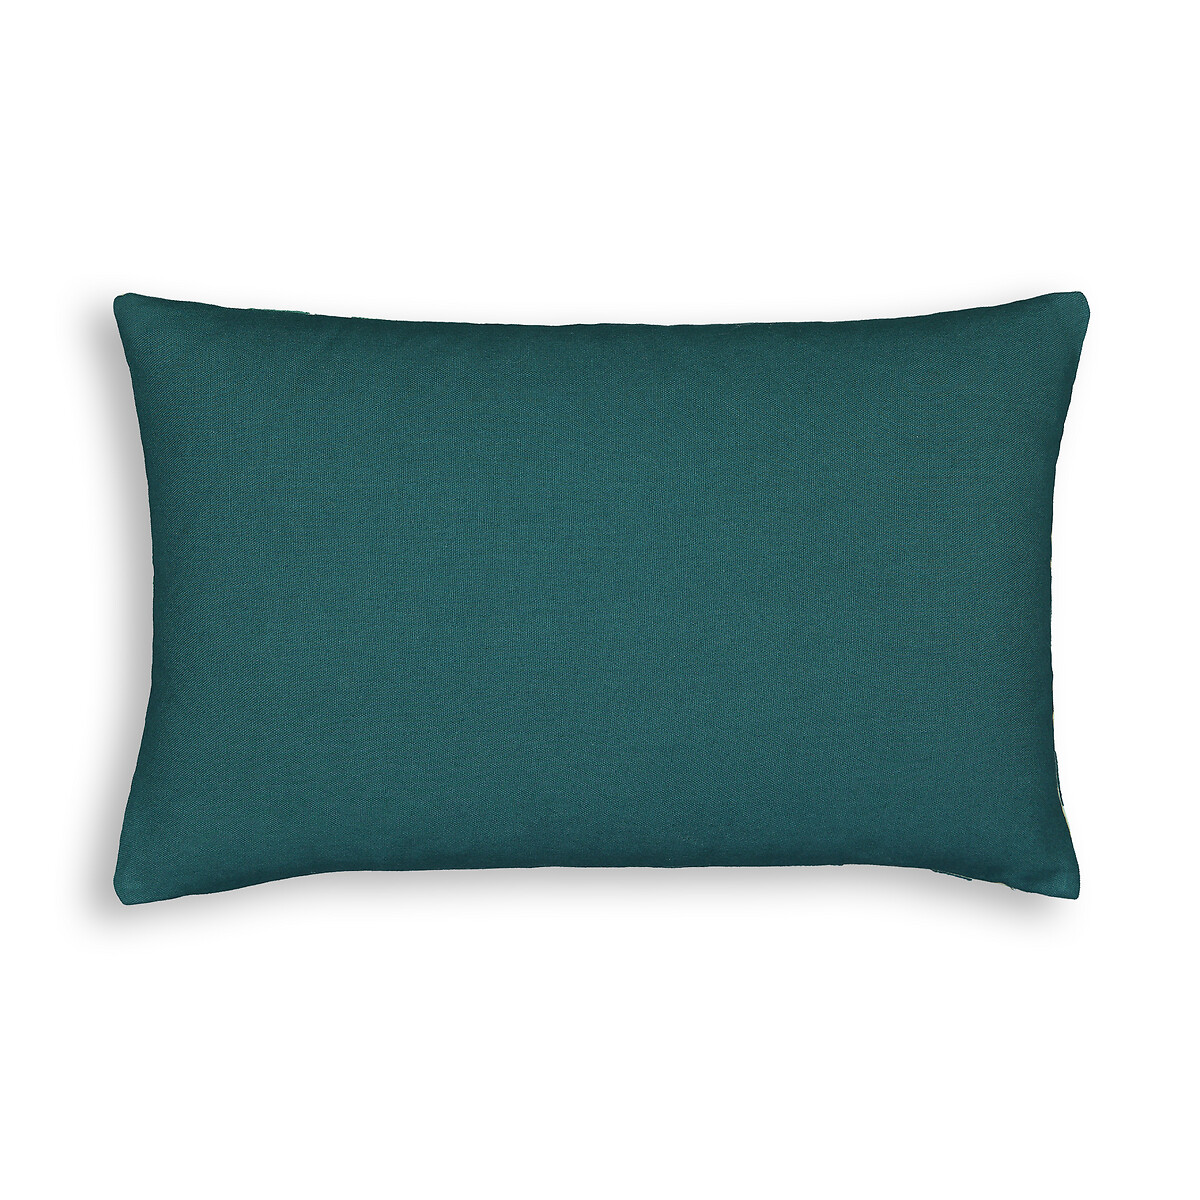 Чехол LaRedoute Для подушки с вышивкой Luxuriance 50 x 30 см зеленый, размер 50 x 30 см - фото 2